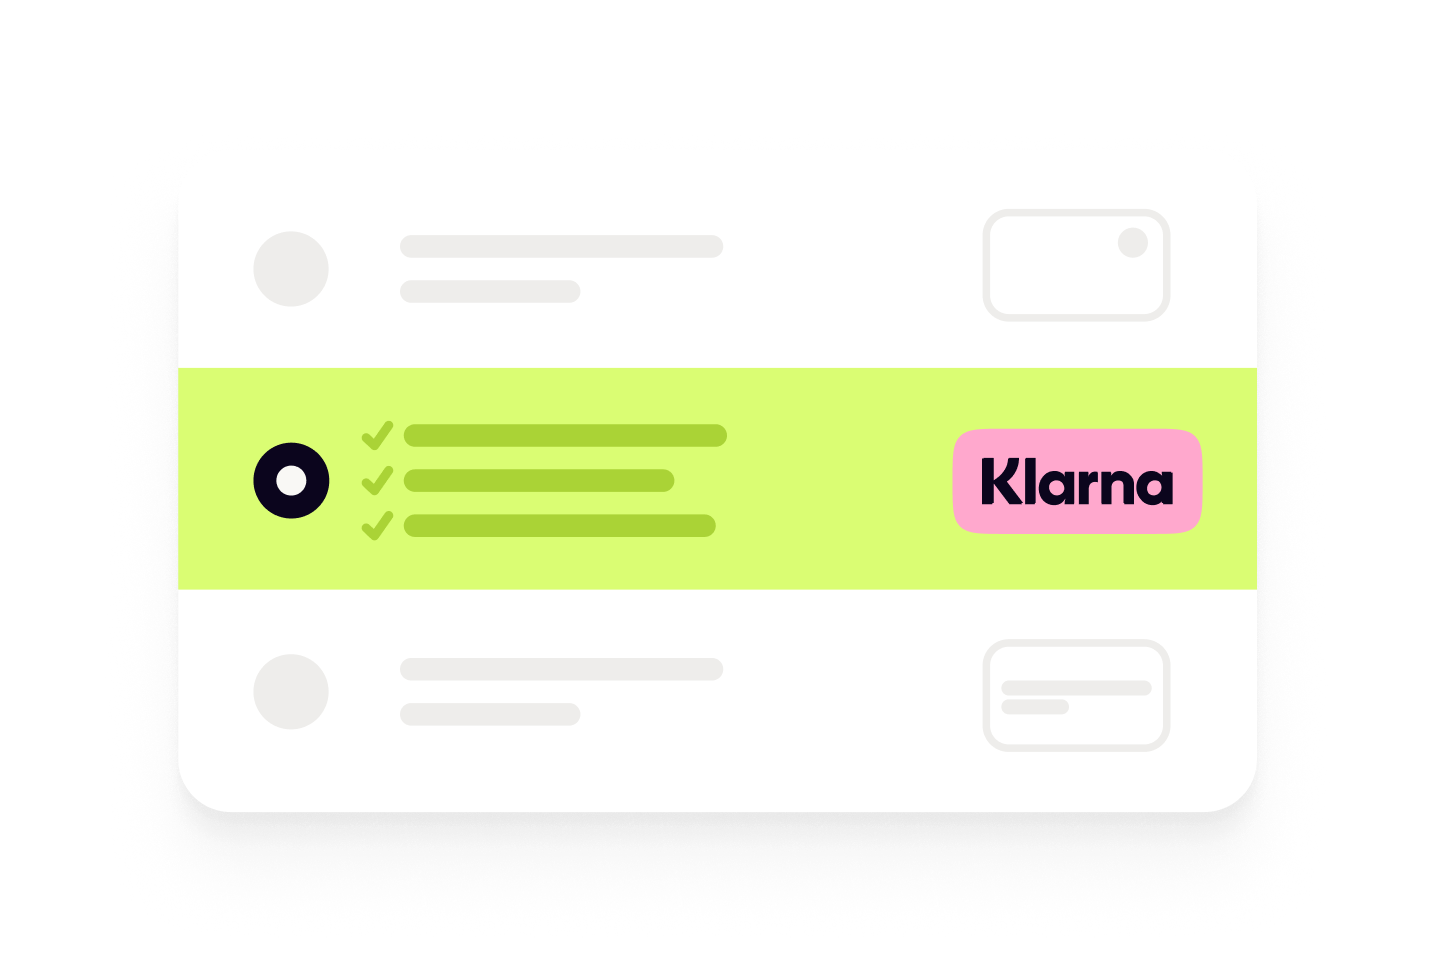 Does Huk Gear accept Klarna financing? — Knoji